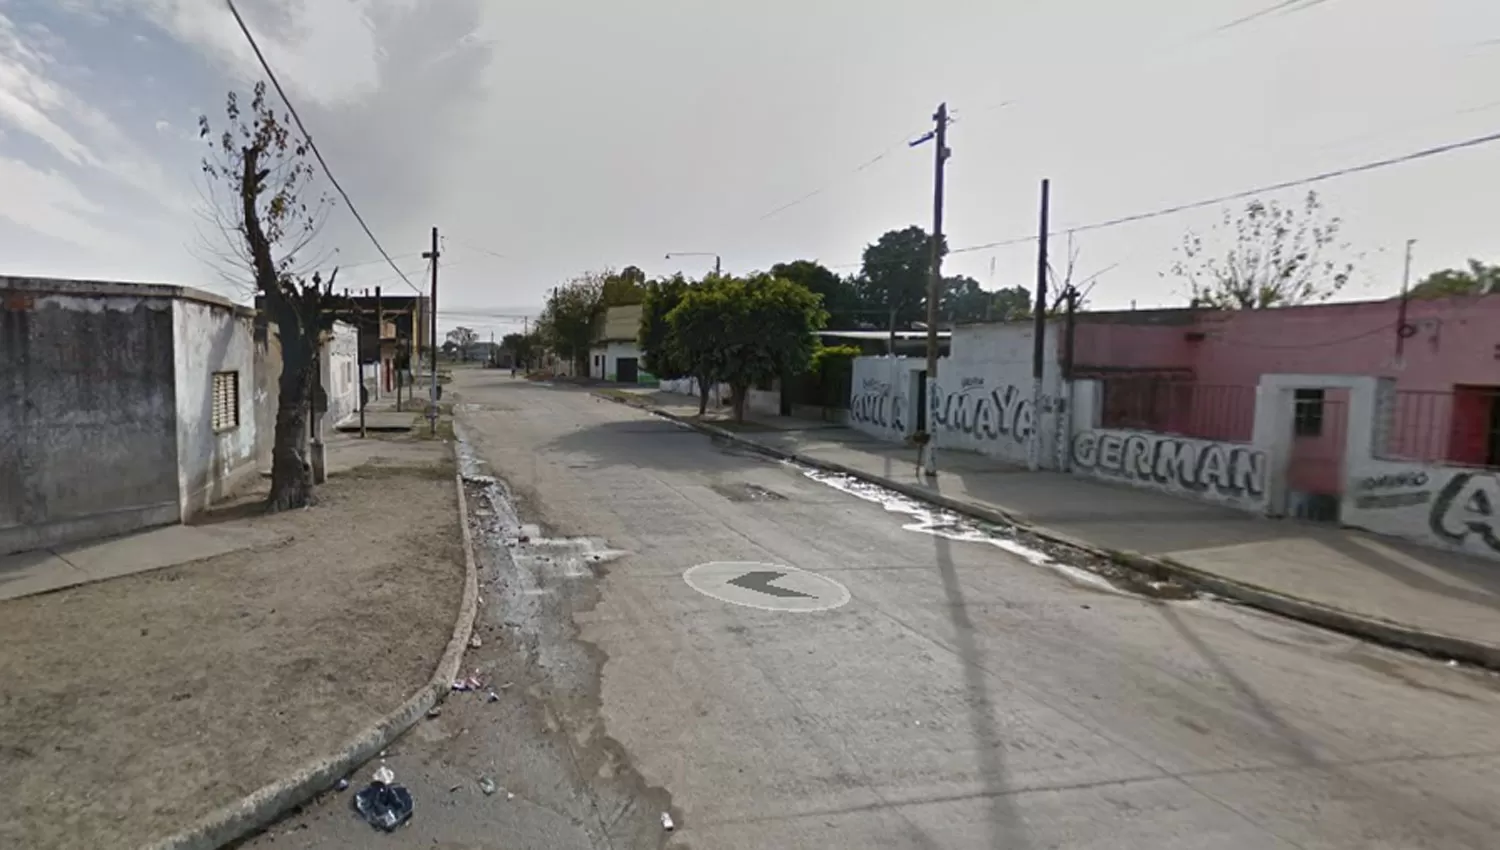 THAMES AL 1.100. El hecho ocurrió en esta calle. CAPTURA DE MAPS